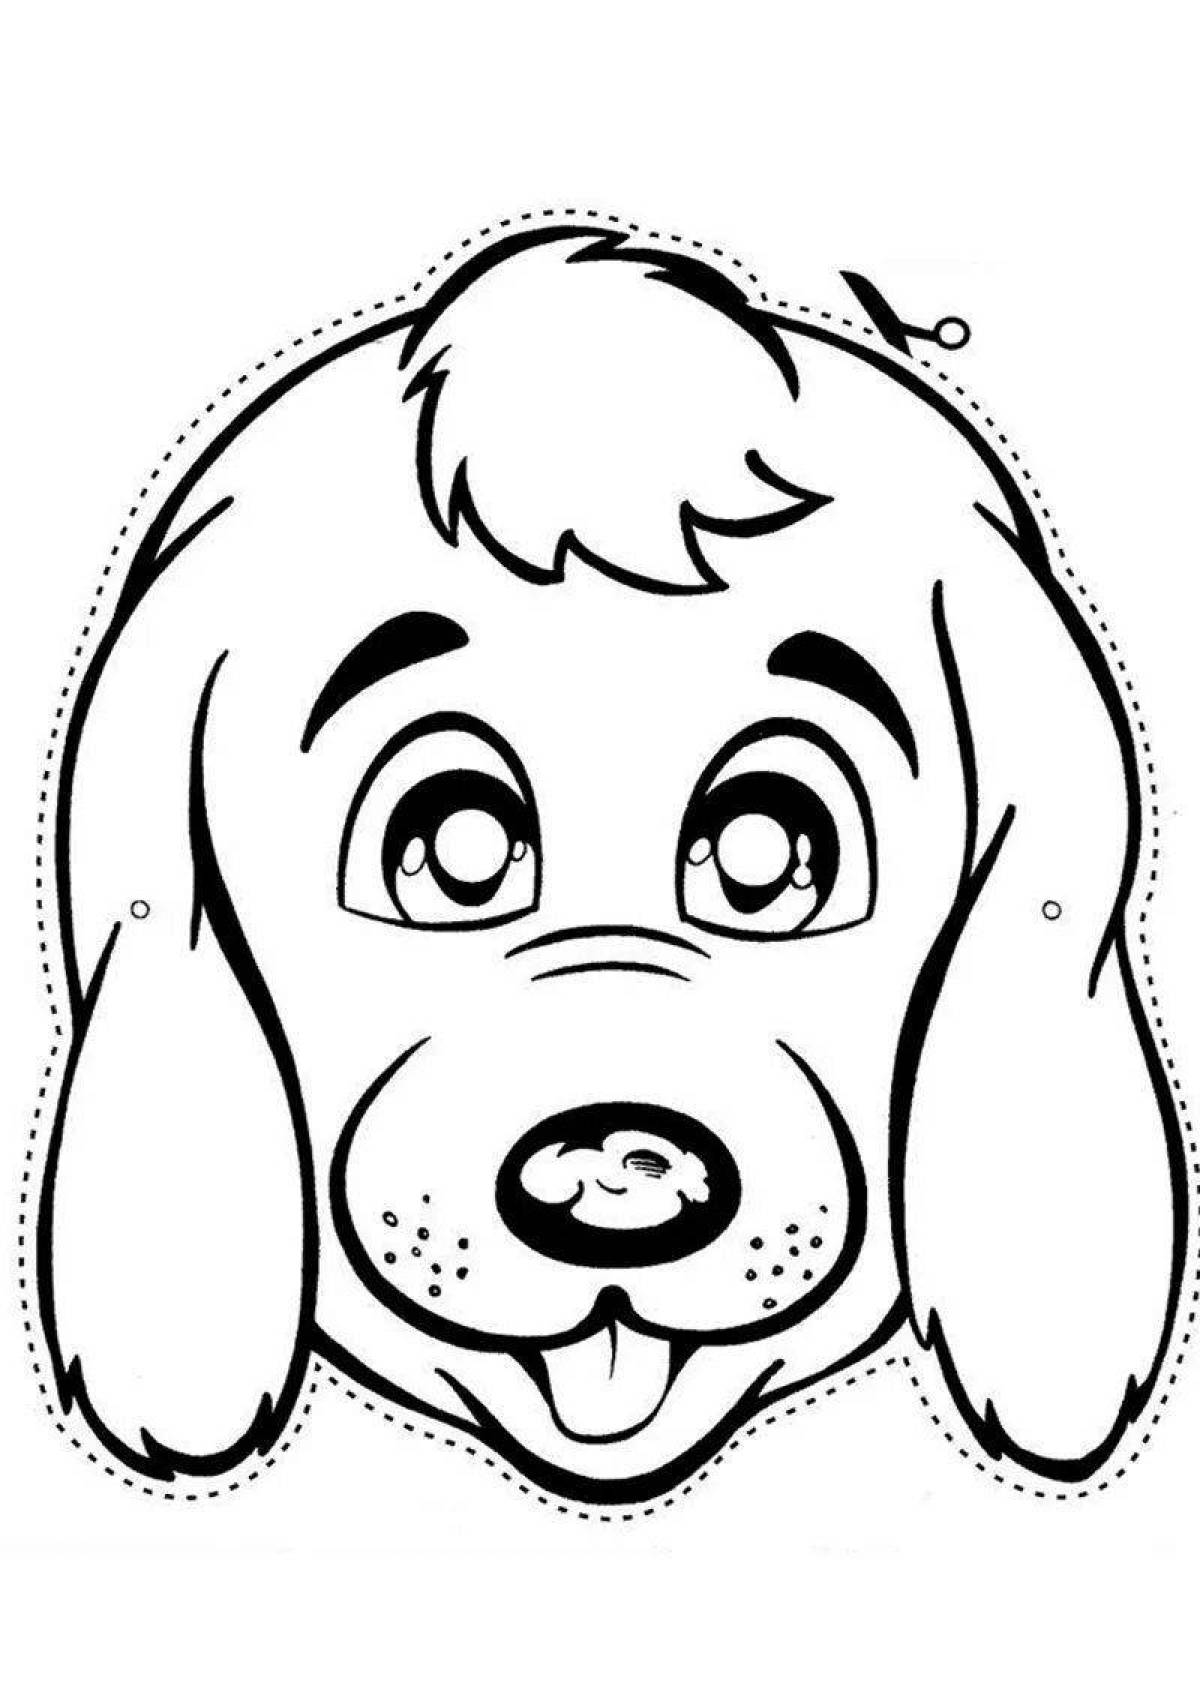 Dramatic dog muzzle coloring page